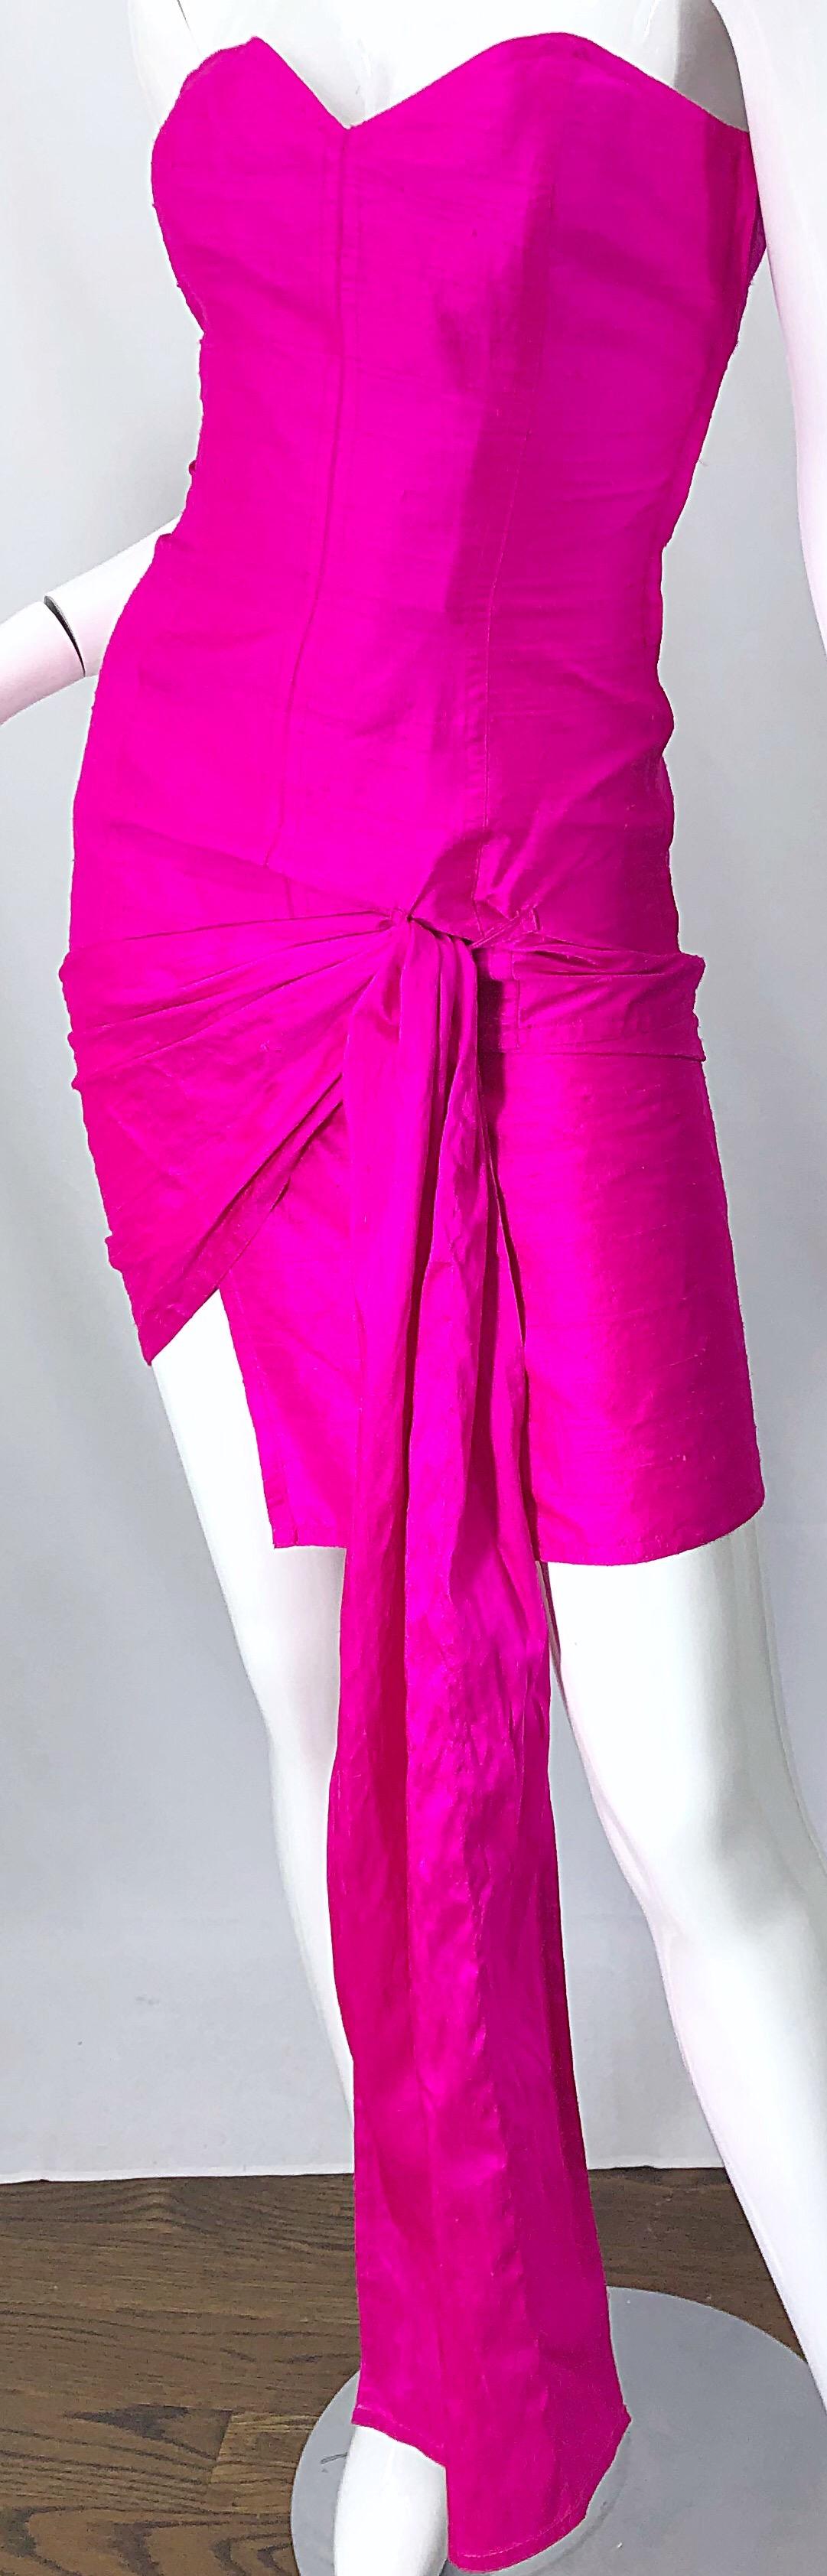 1980s Angelo Tarlazzi Shocking Hot Pink Avant Garde Silk Shantung Vintage Dress For Sale 2